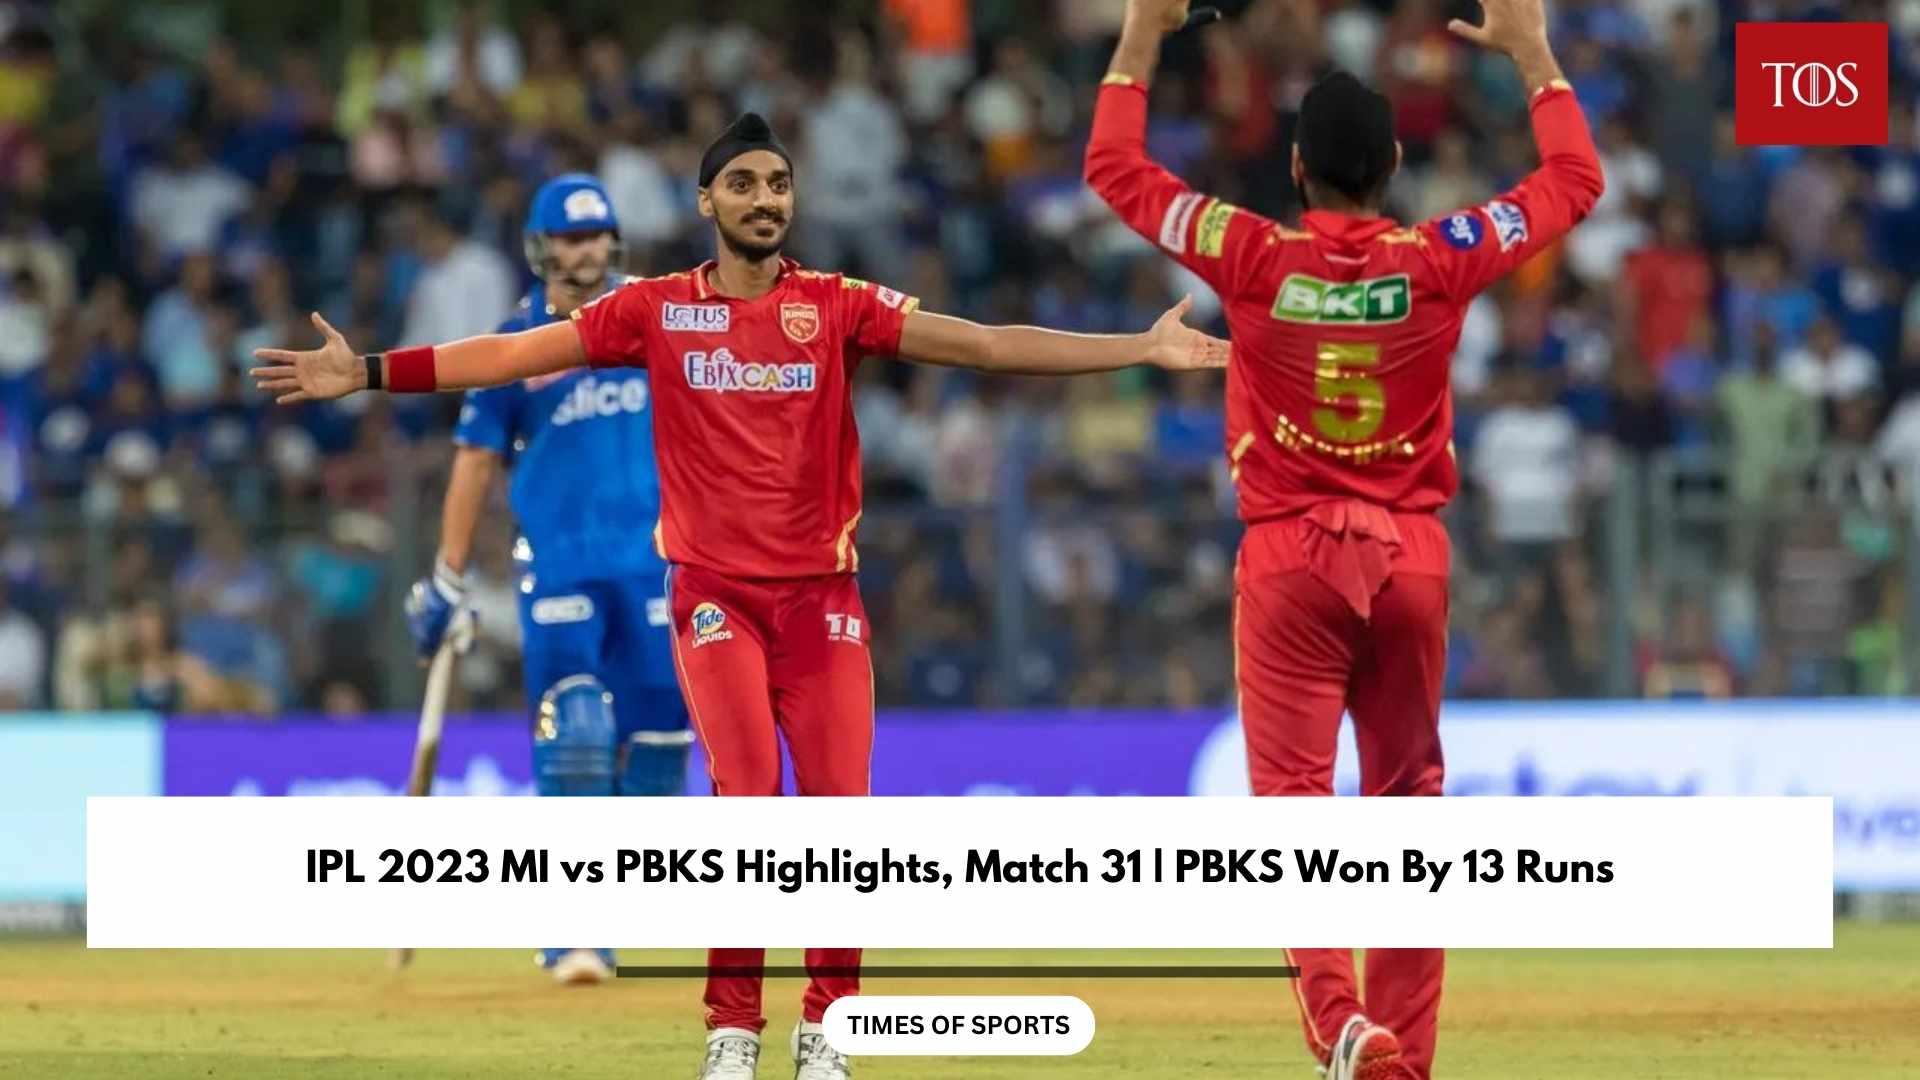 IPL 2023 MI vs PBKS Highlights, Match 31 PBKS Won By 13 Runs